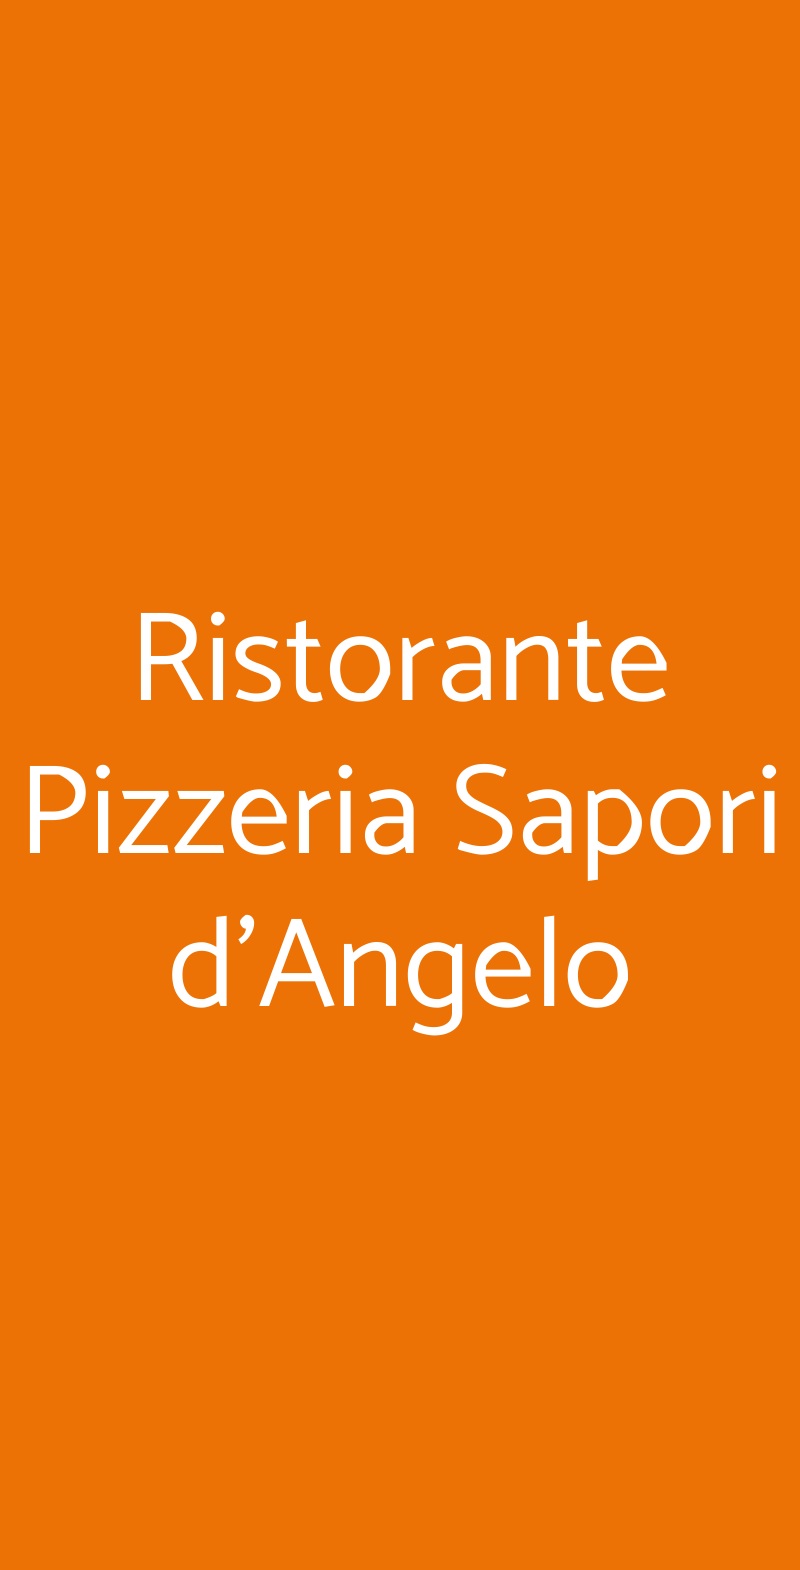 Ristorante Pizzeria Sapori d'Angelo Milano menù 1 pagina